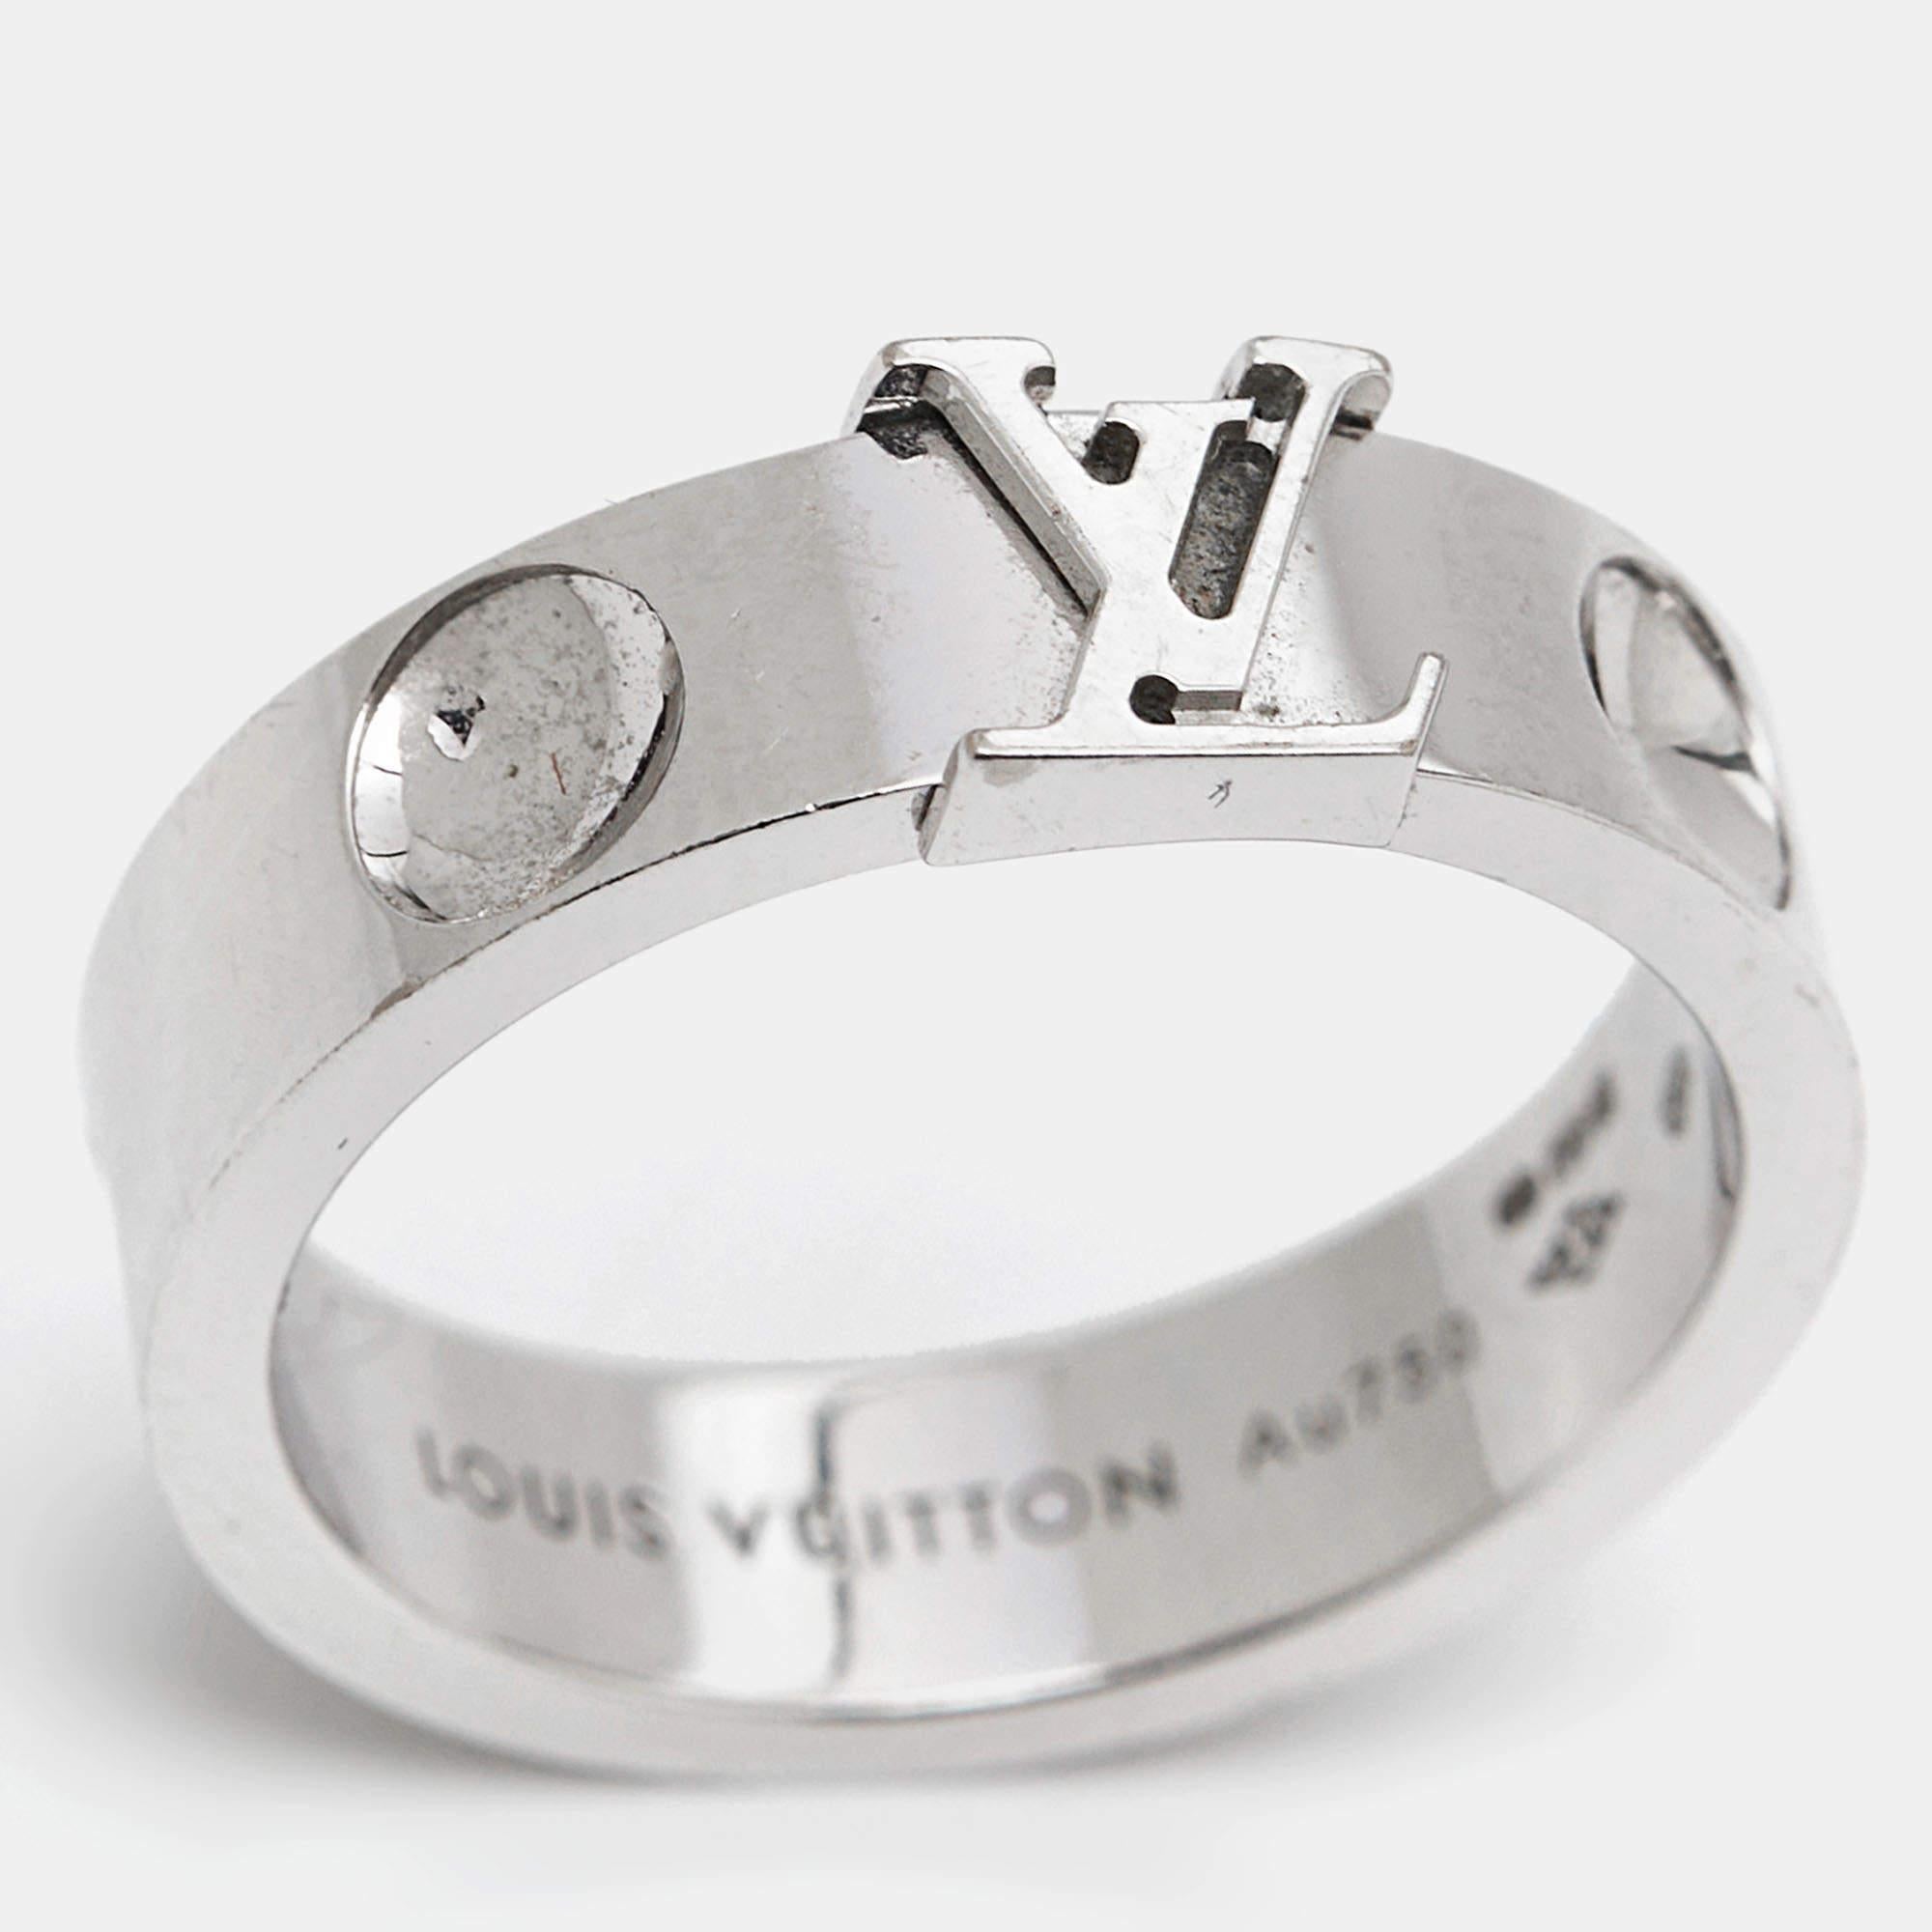 Louis Vuitton Empreinte 18k White Gold Ring Size 52 For Sale 1